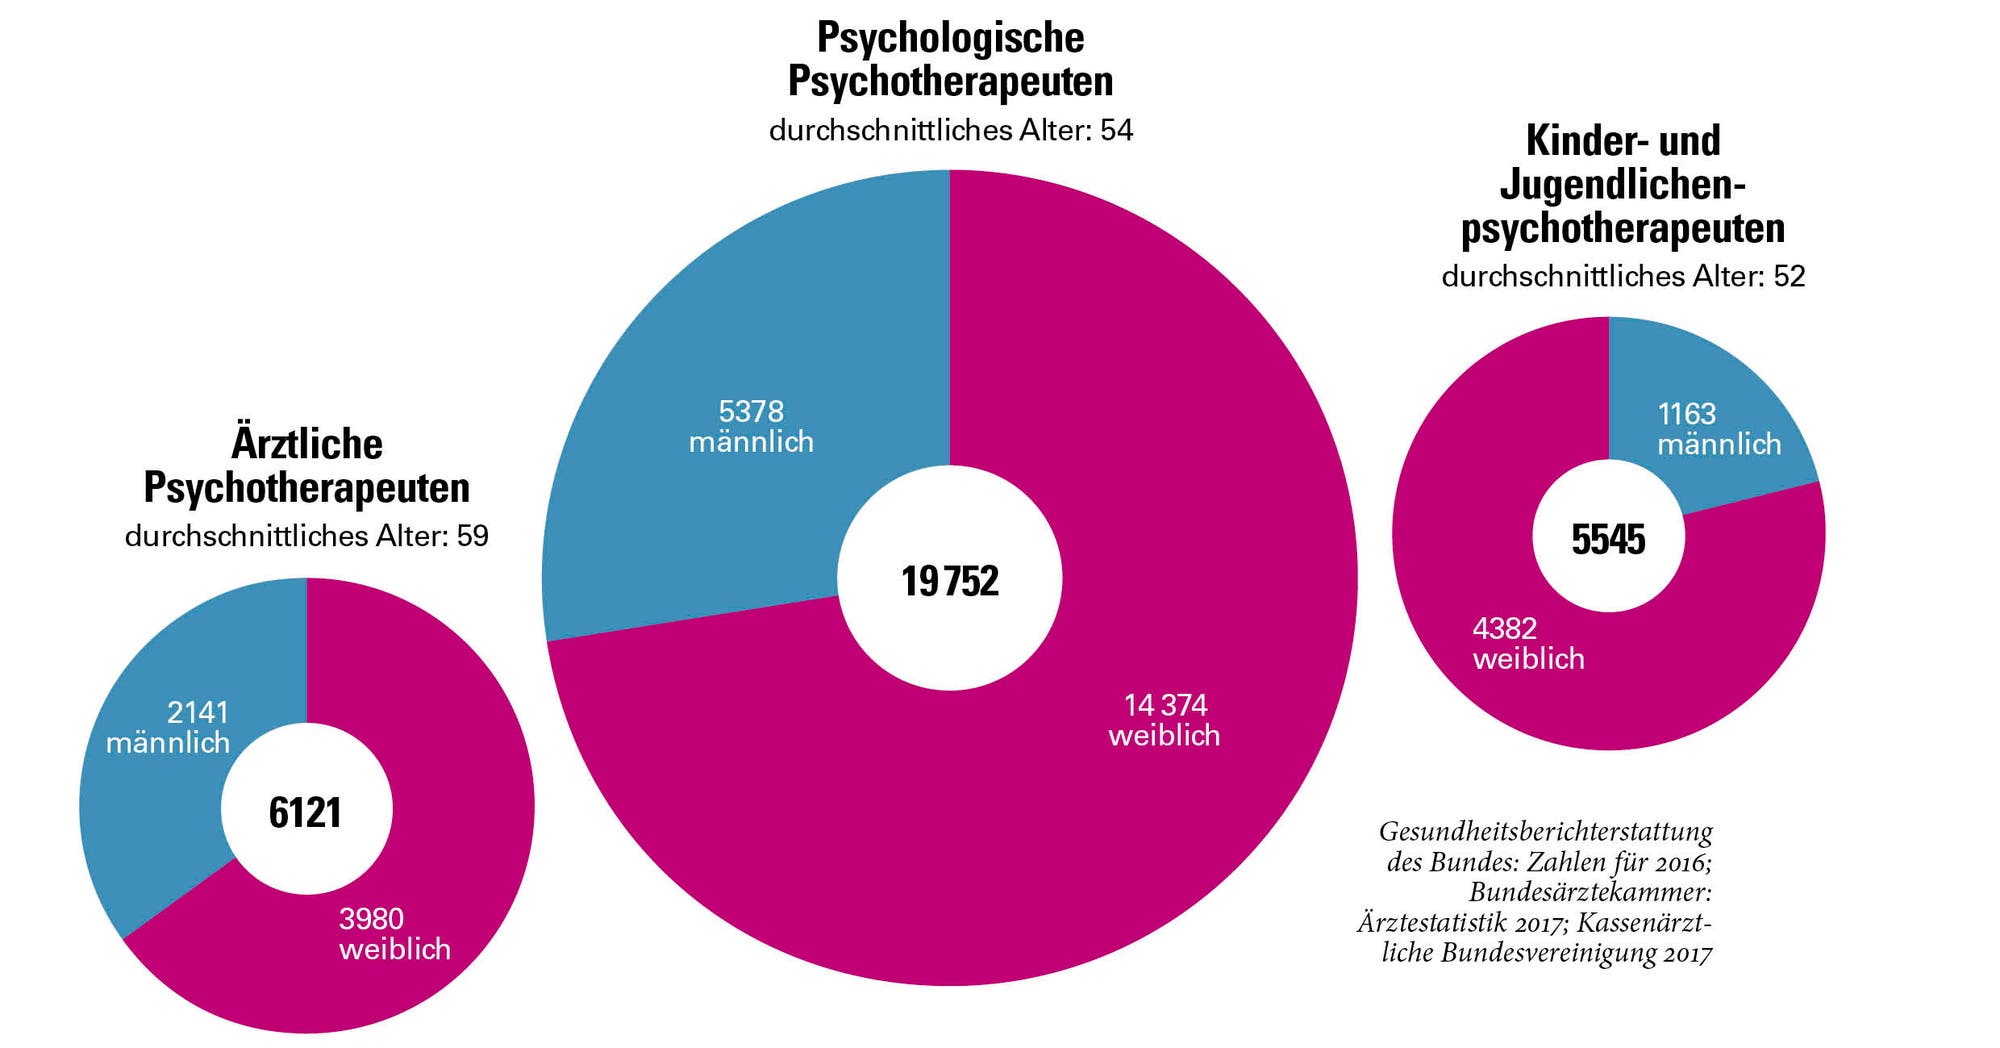 Psychotherapeuten in Deutschland